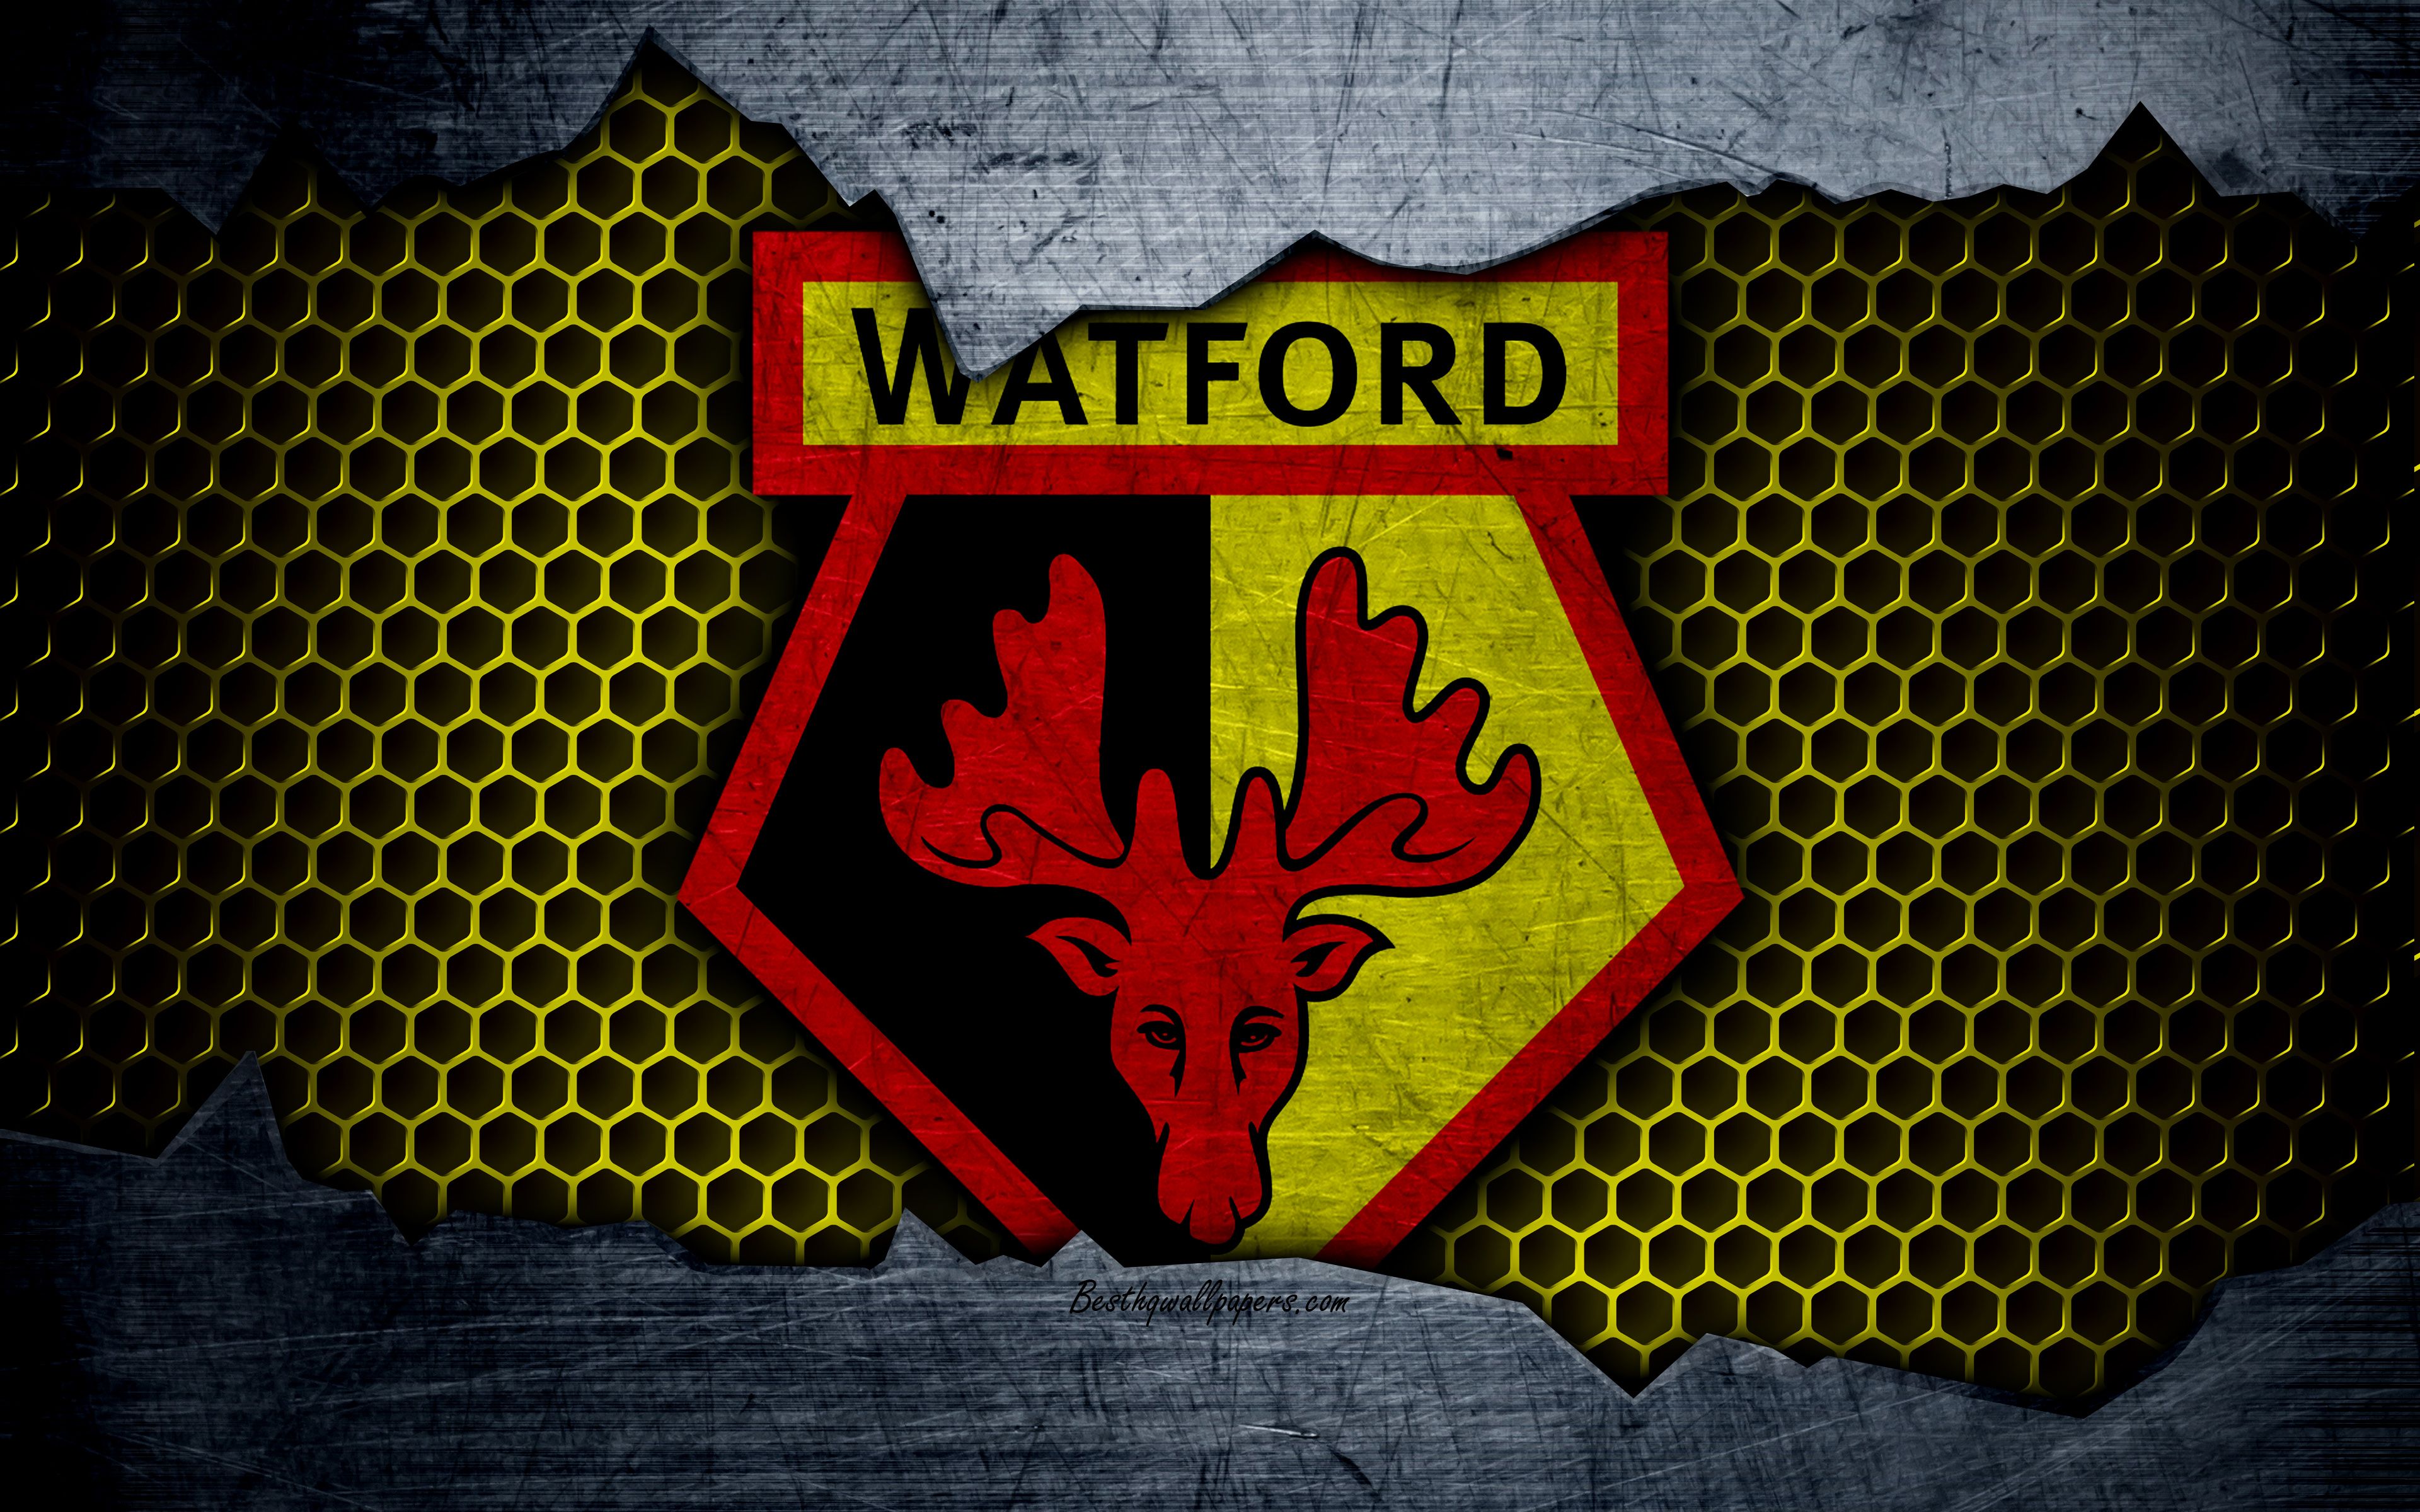 Download wallpaper Watford FC, 4k, football, Premier League